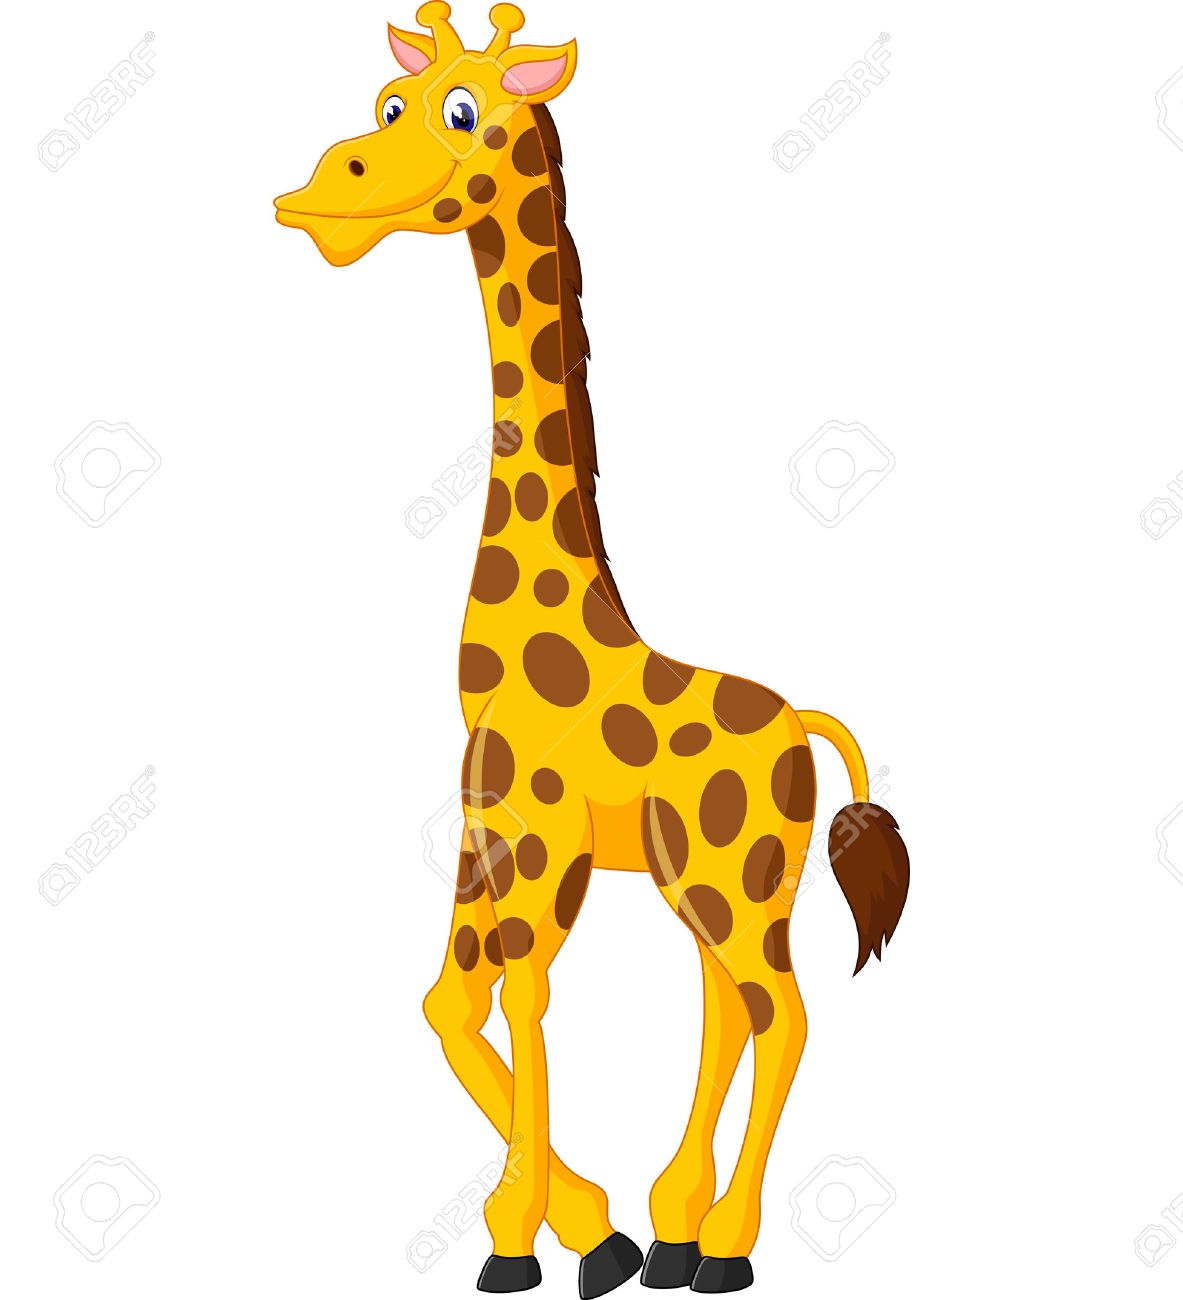 29,585 Giraffe Stock Vector Illustration And Royalty Free Giraffe.